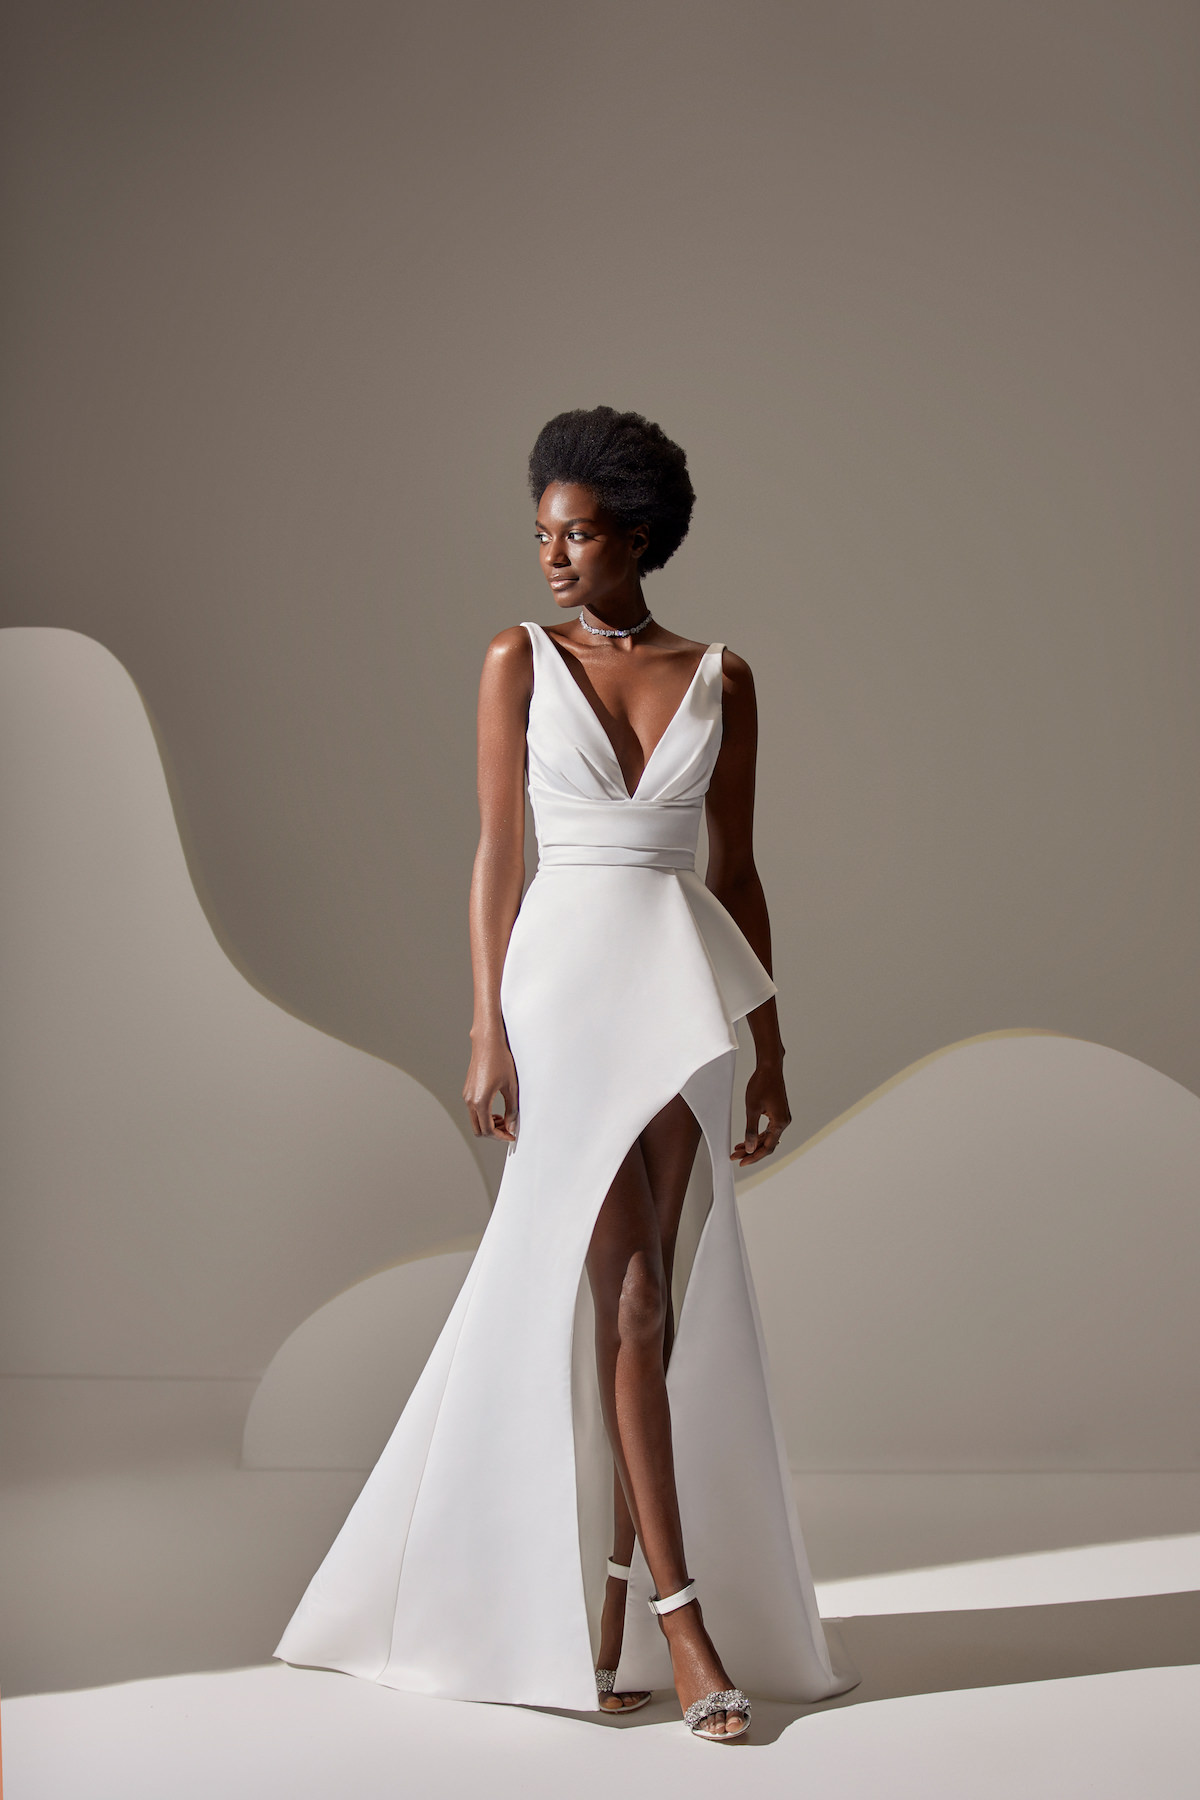 Simple Wedding Dress by Milla Nova - Uma white lace